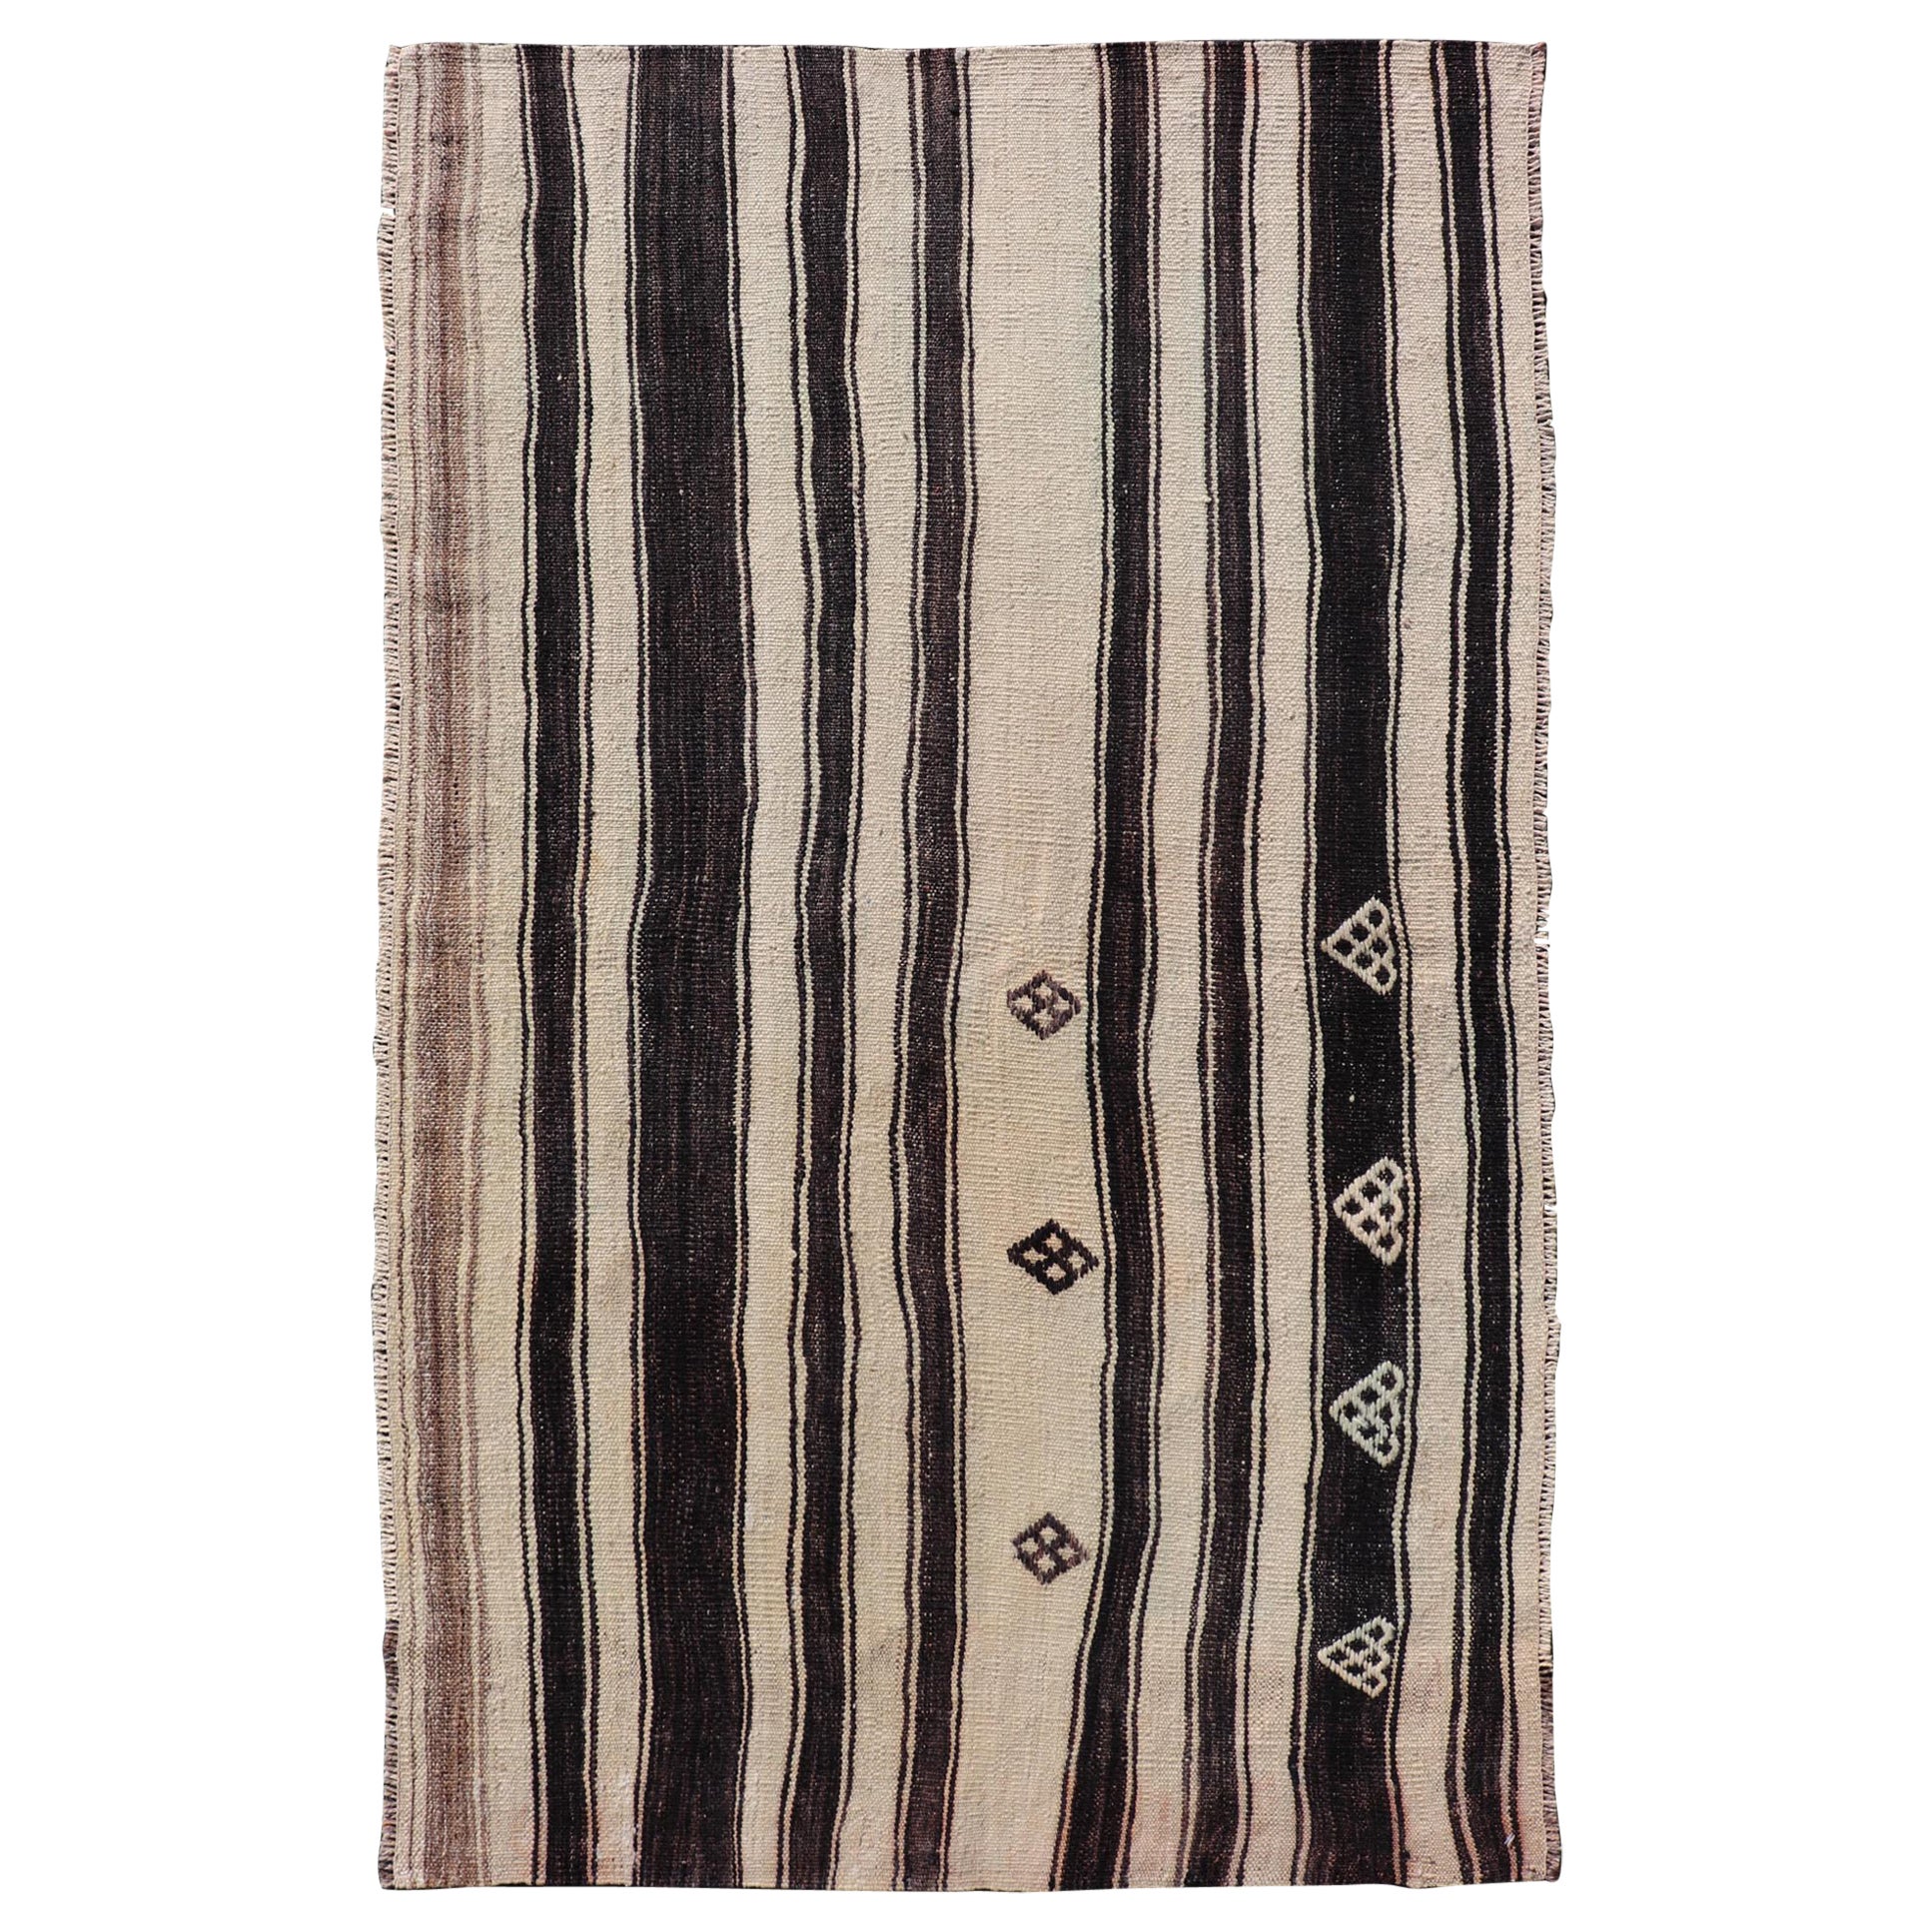 Stripe Design Turkish Vintage Flat-Weave Rug in Dark Brown, Taupe, and Cream  For Sale